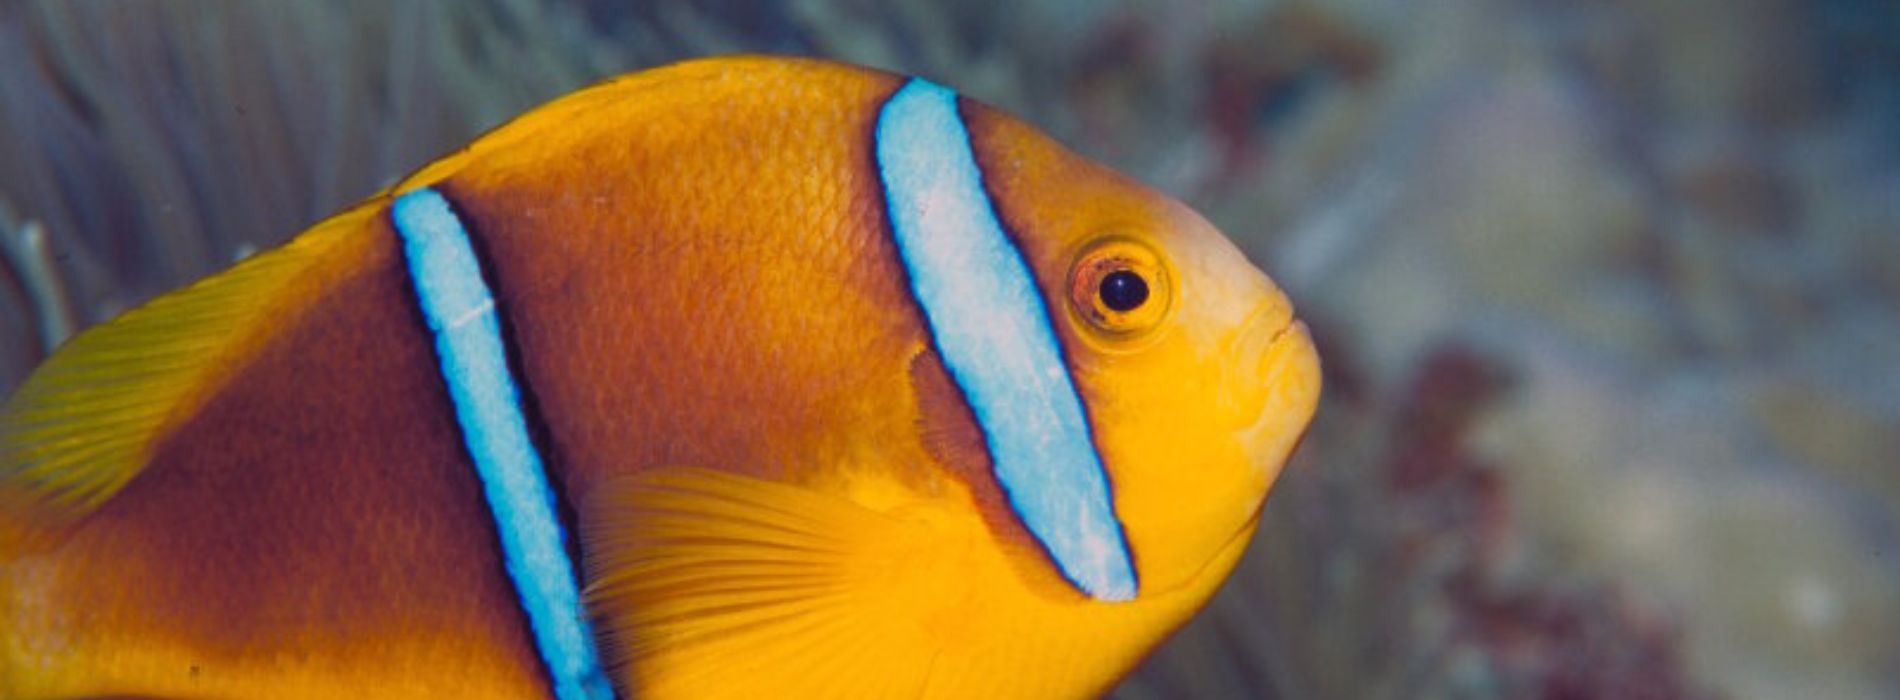 anemonefish-species